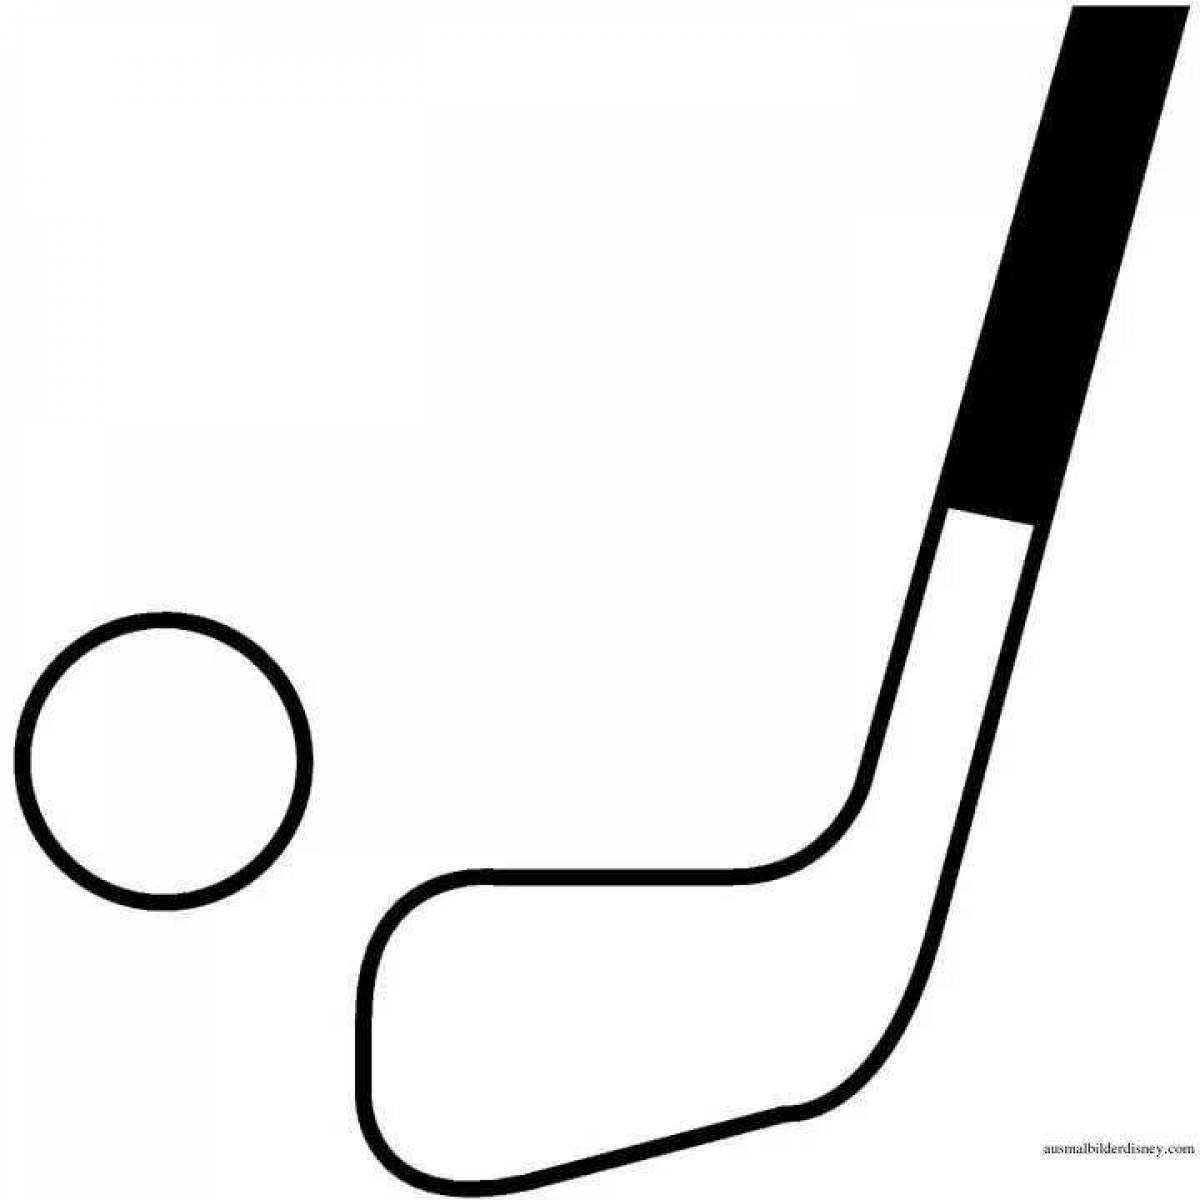 Coloring big hockey stick